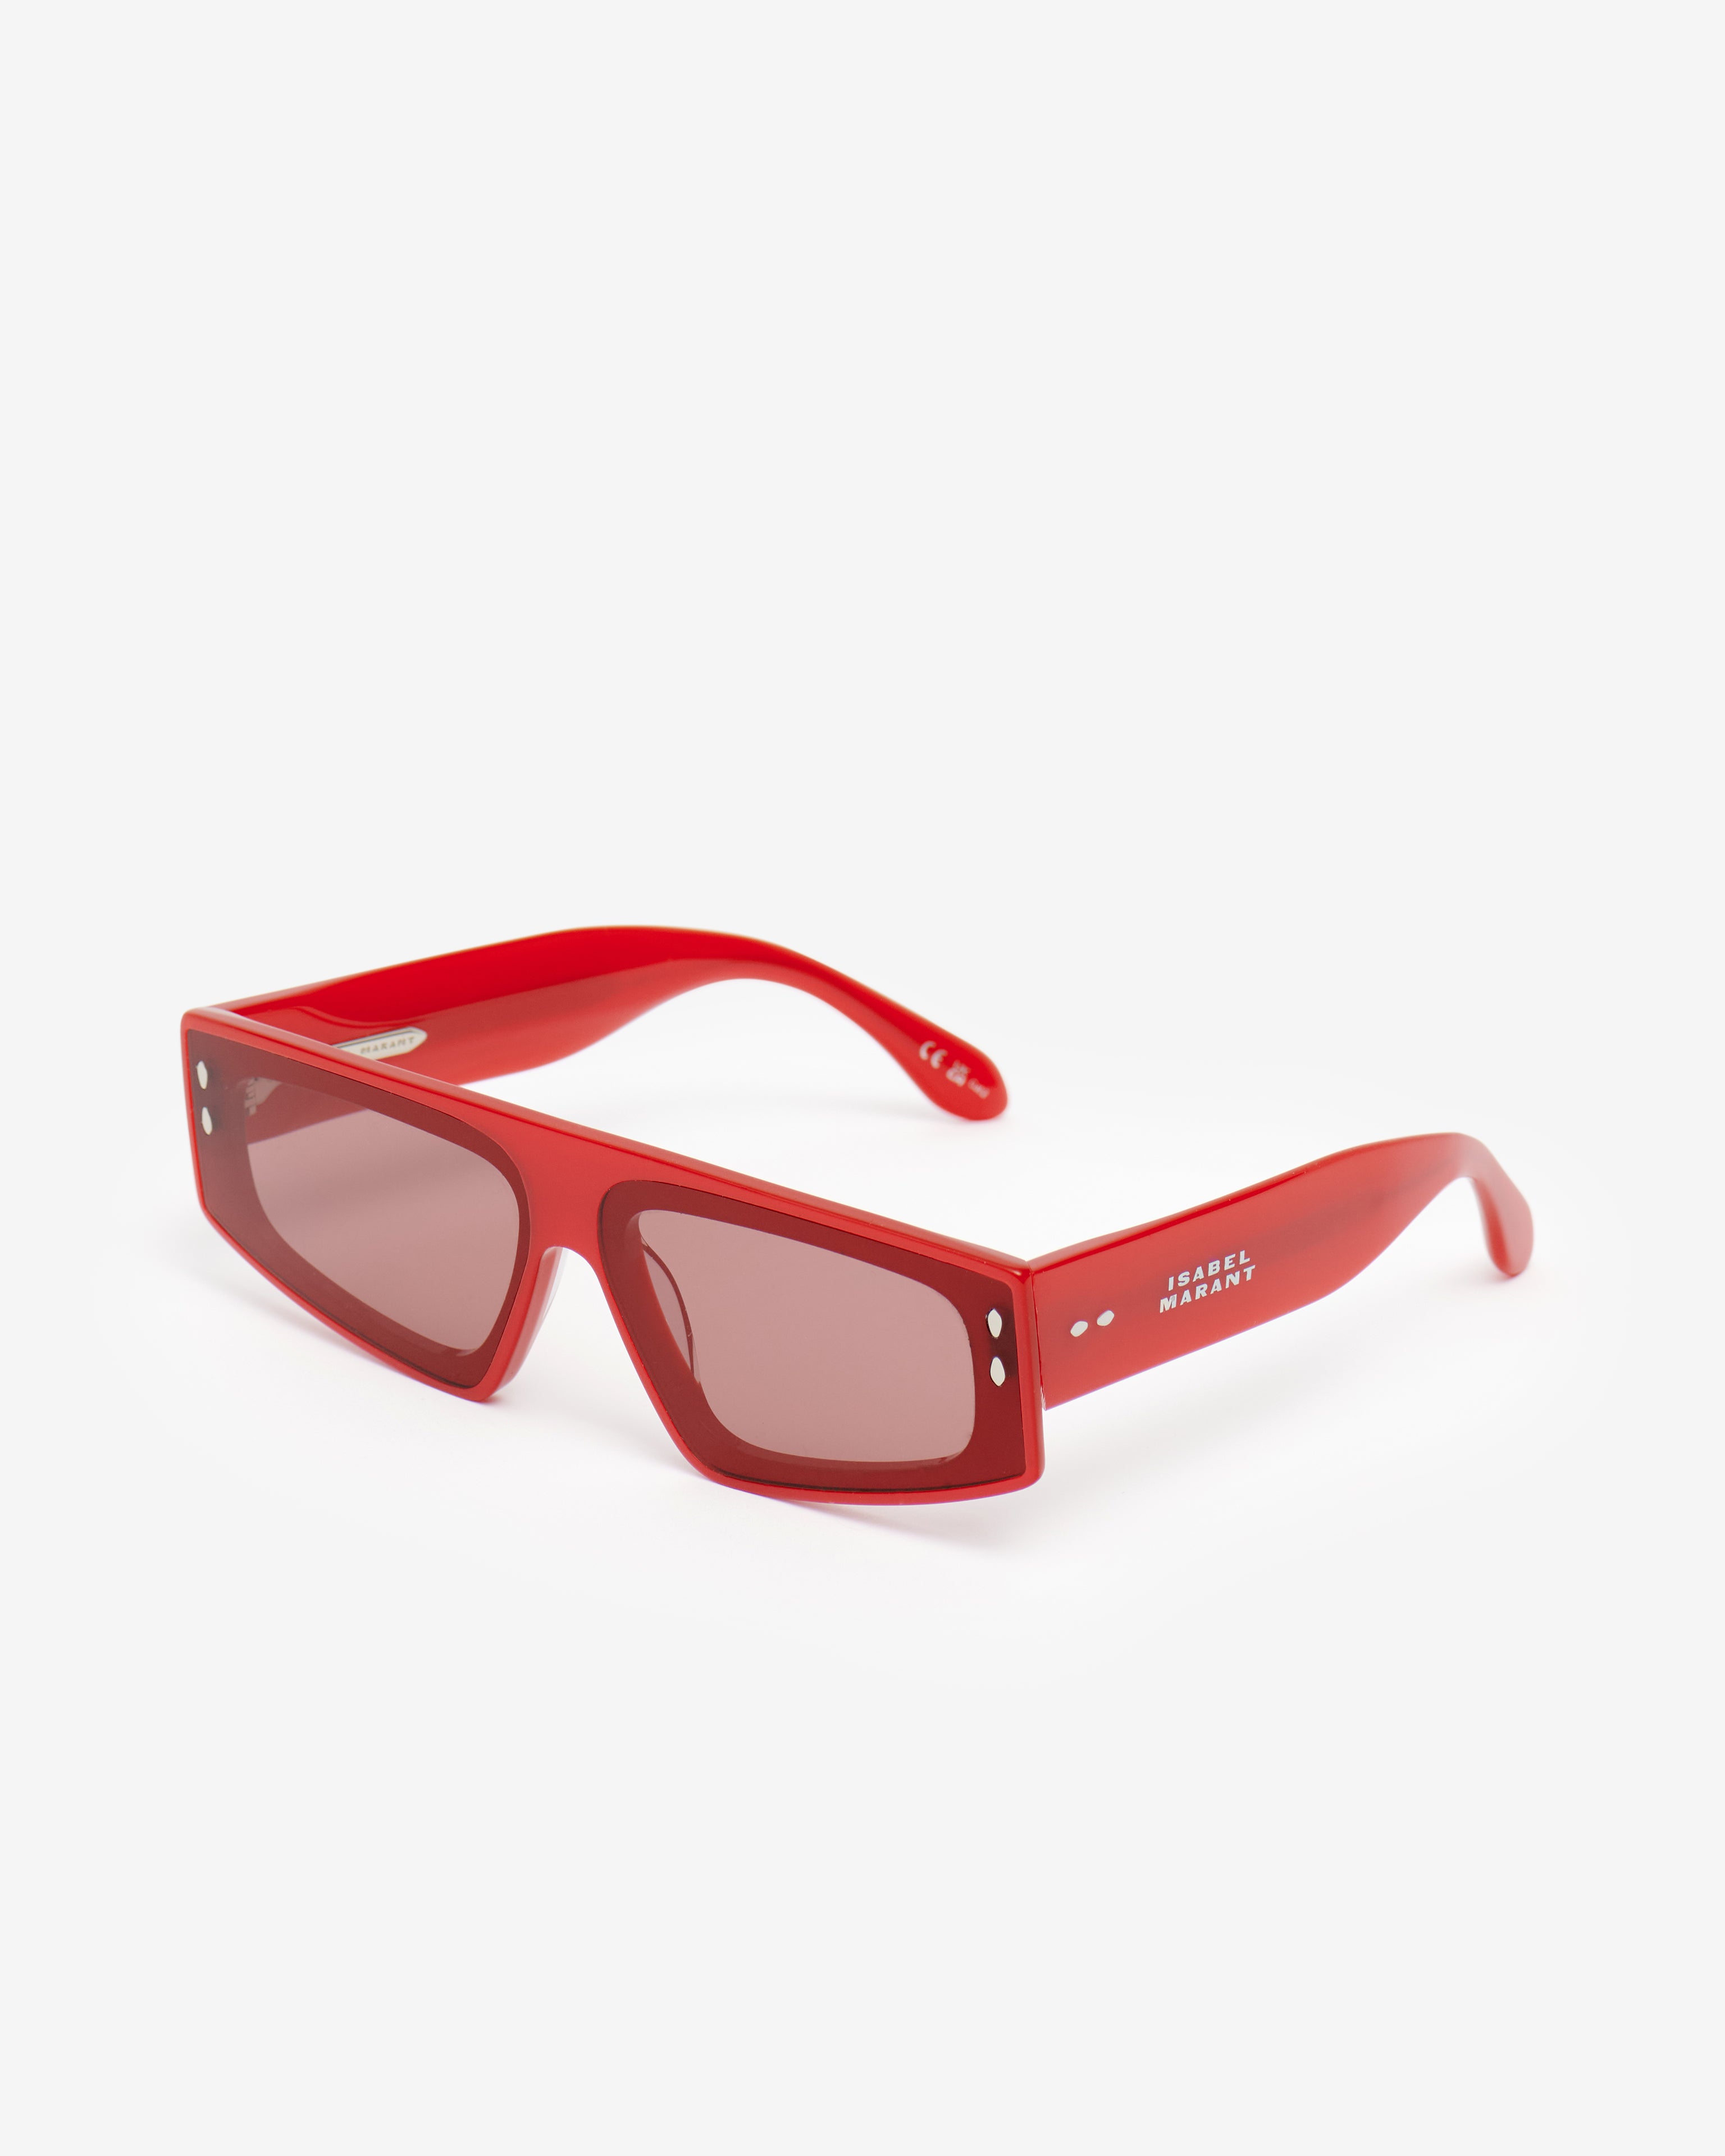 Zoomy occhiali da sole Woman Pearled red-burgundy 1